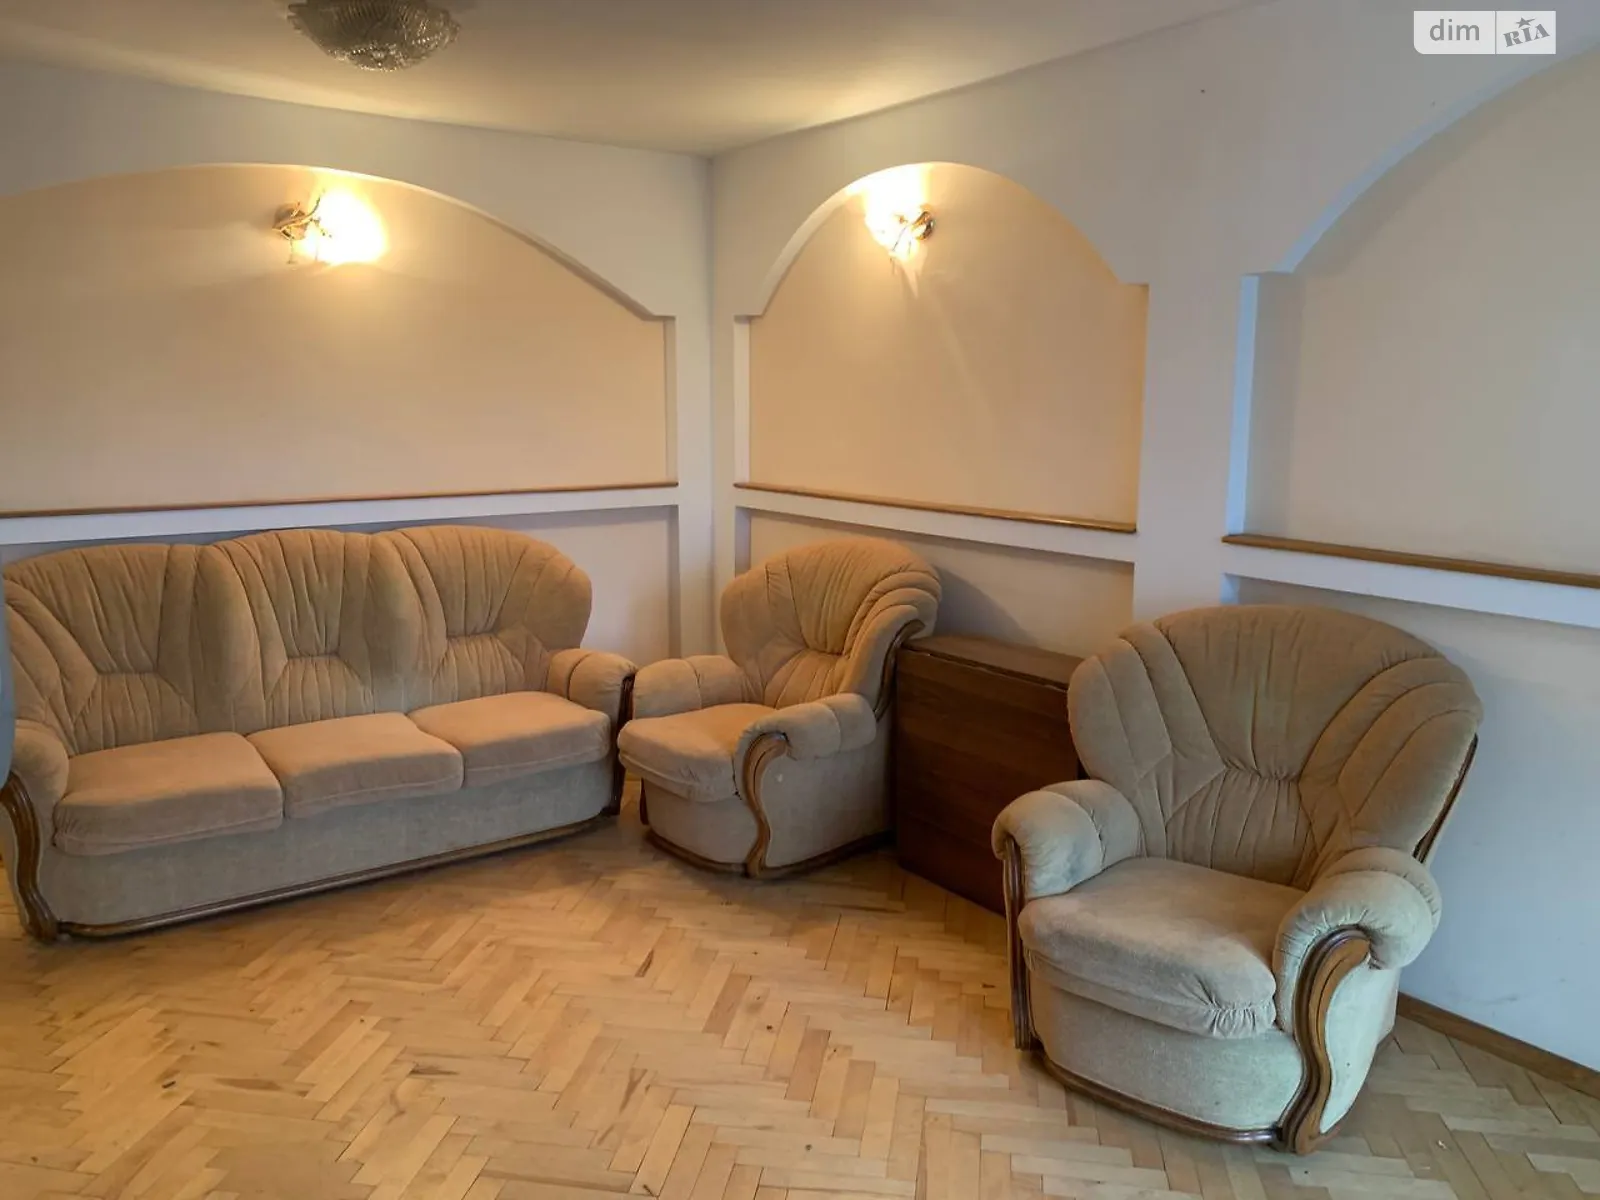 3-кімнатна квартира 61 кв. м у Тернополі, цена: 48000 $ - фото 1